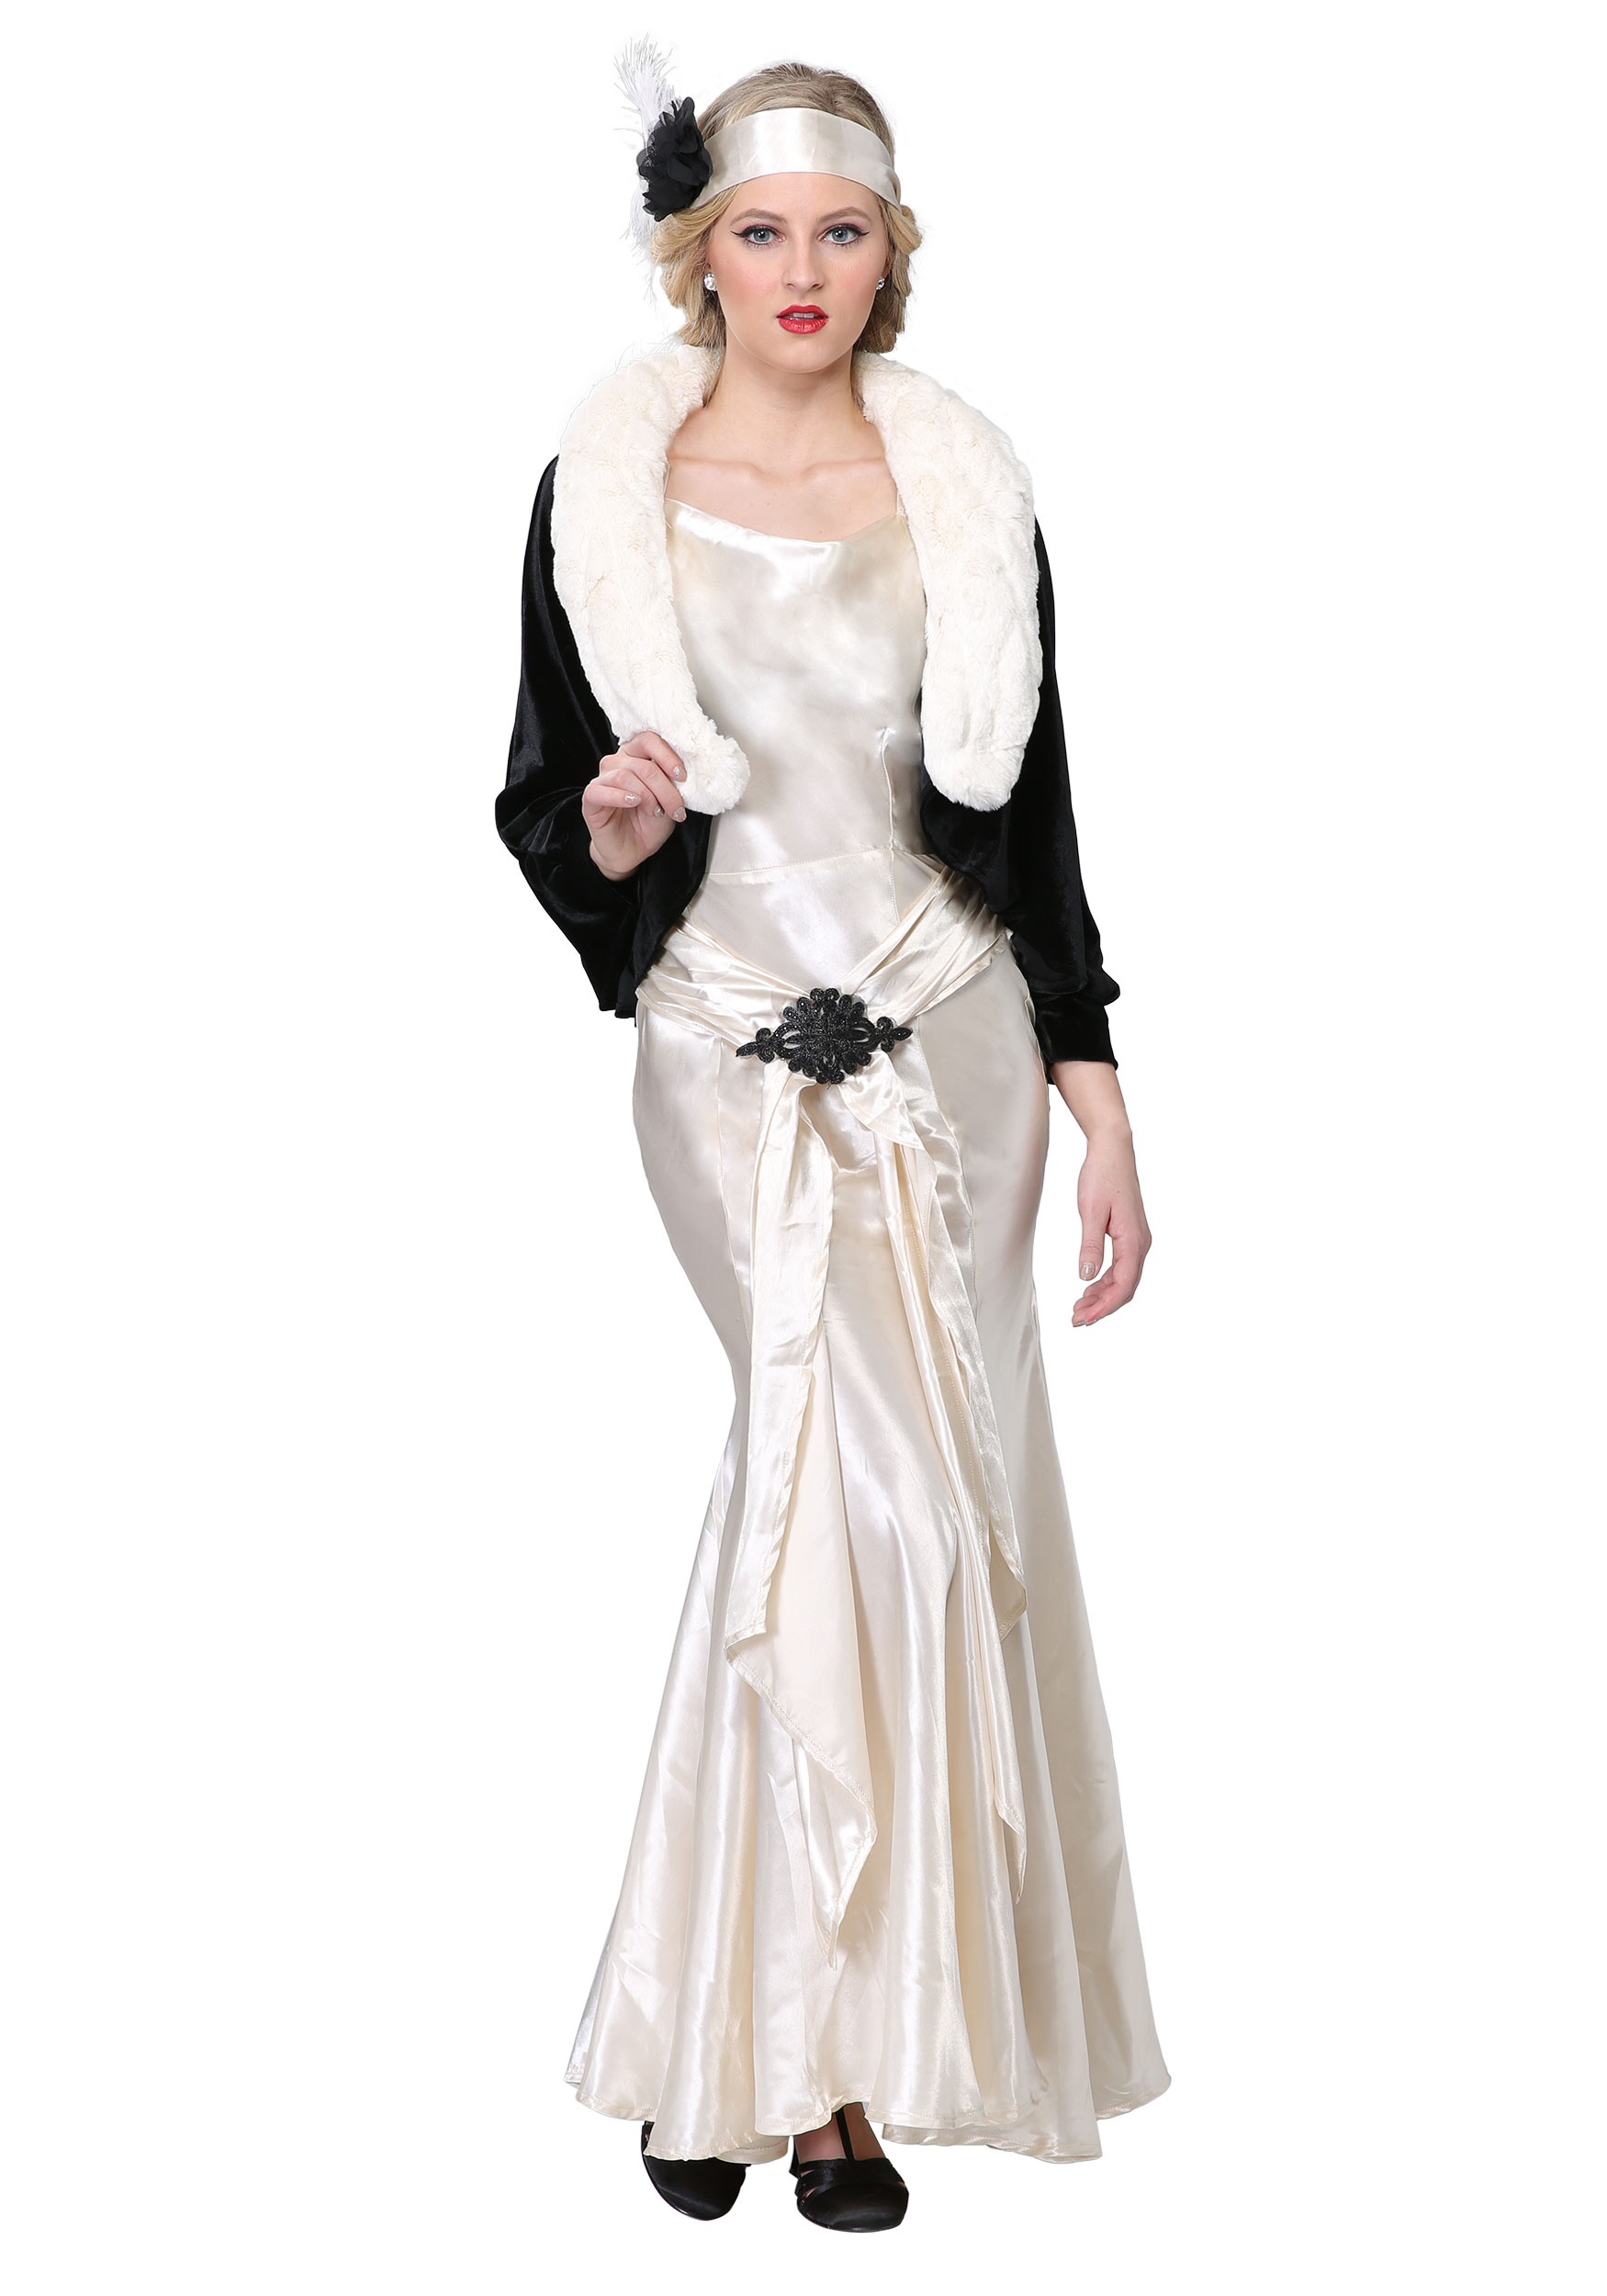 1920s Socialite Plus Size Women's Costume - lady in long white dress